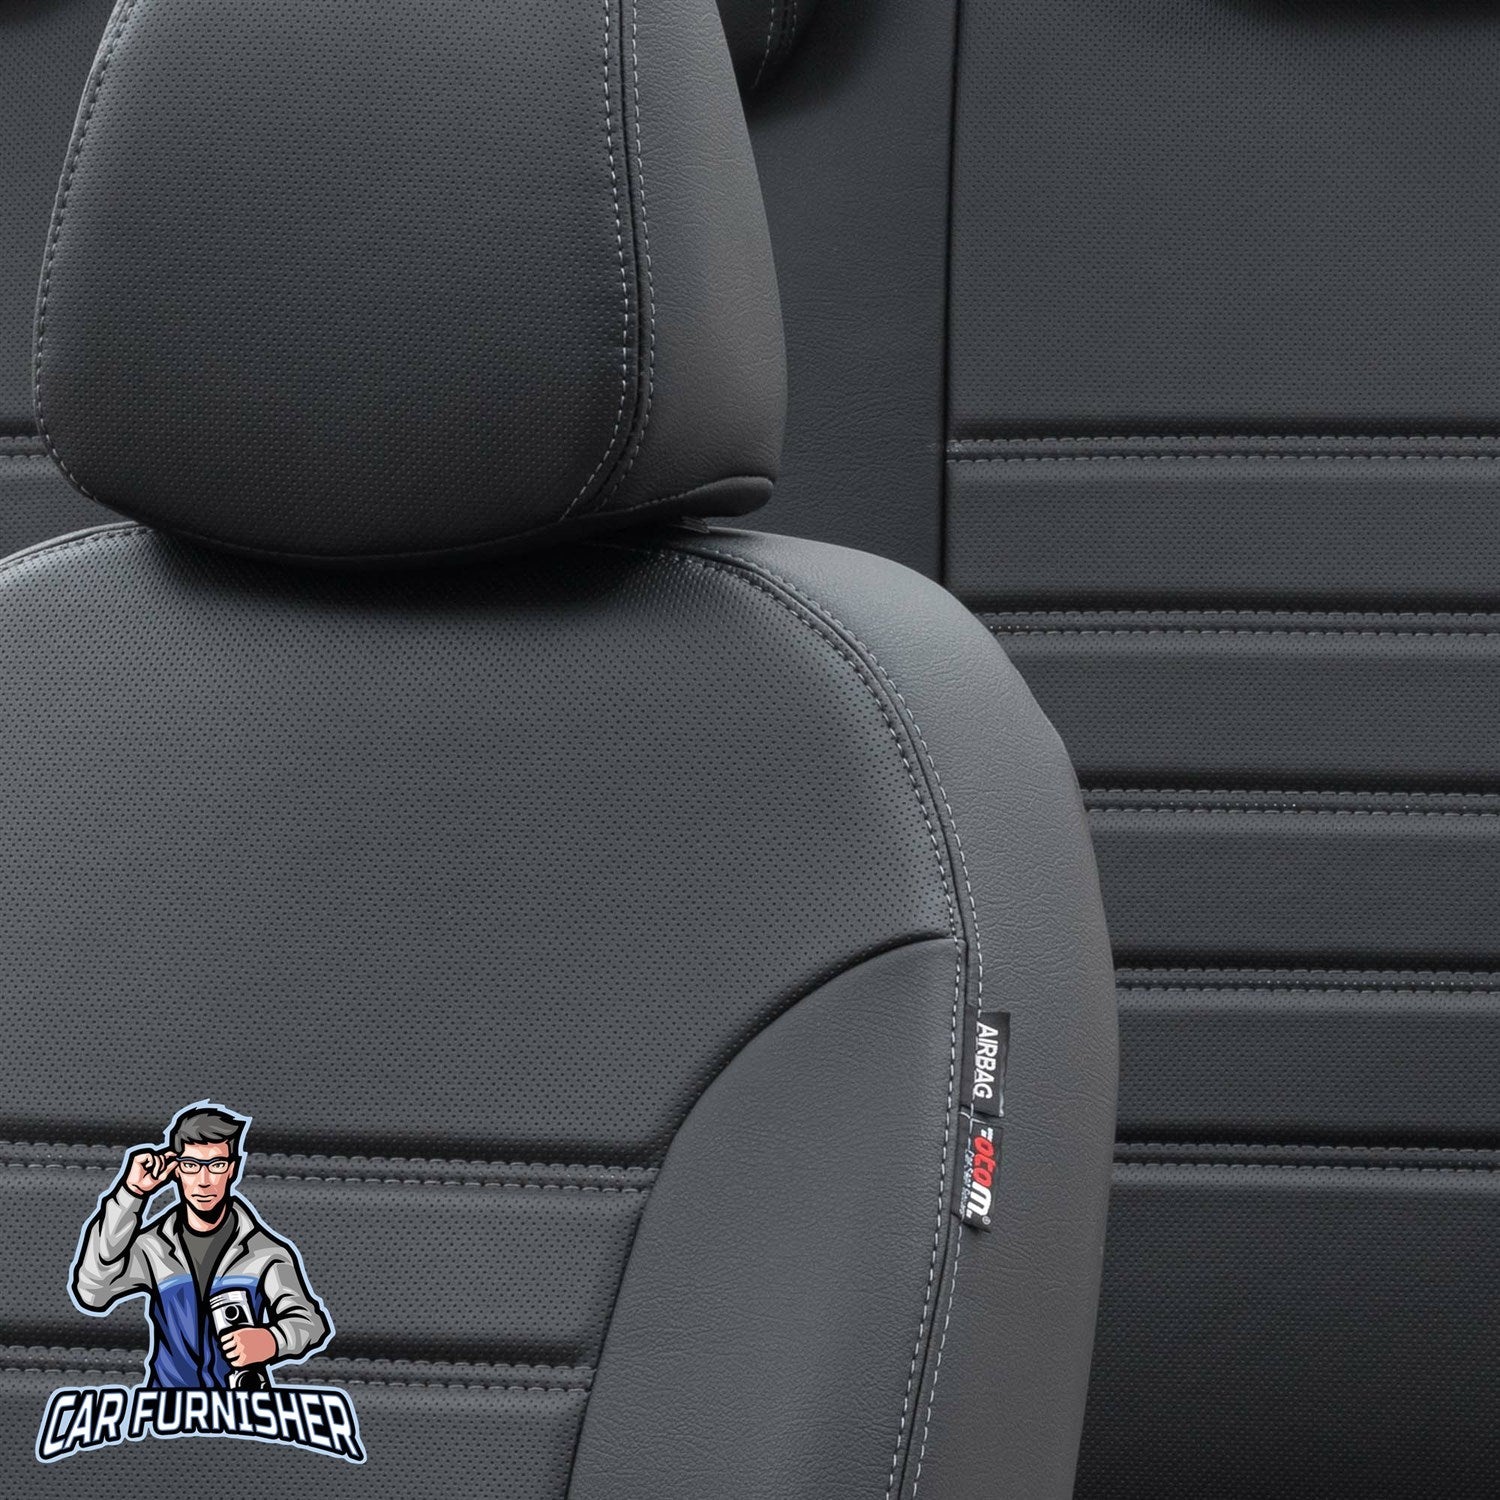 Suzuki S-Cross Car Seat Covers 2013-2018 Istanbul Design Black Leather